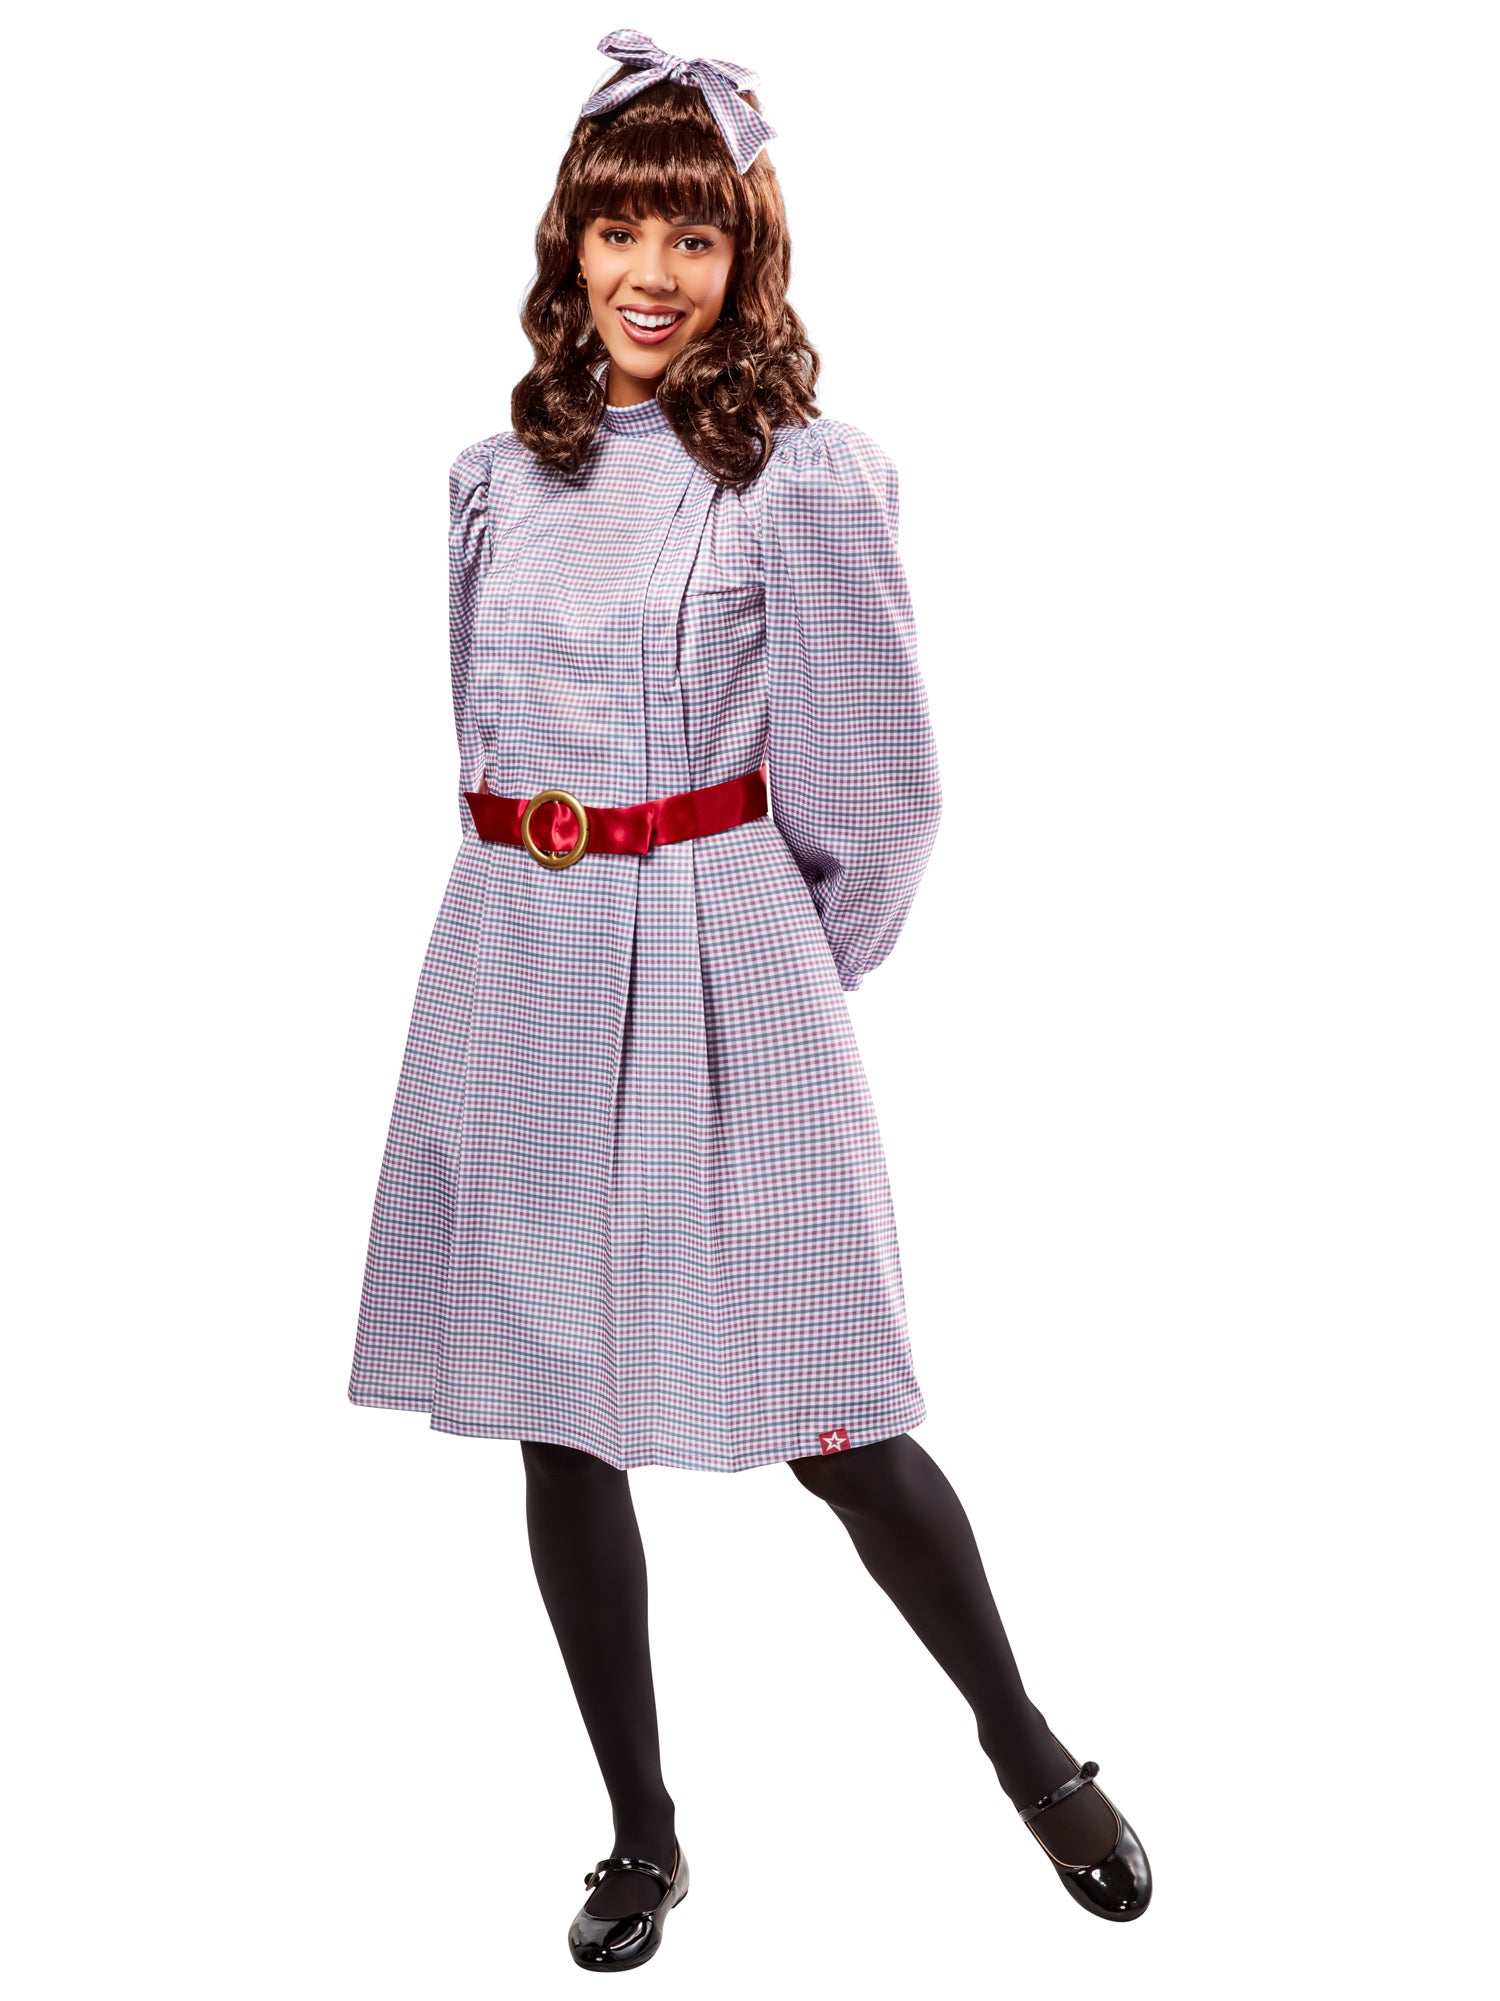 Women's American Girl Samantha Parkington Plaid Dress Costume Set - costumes.com